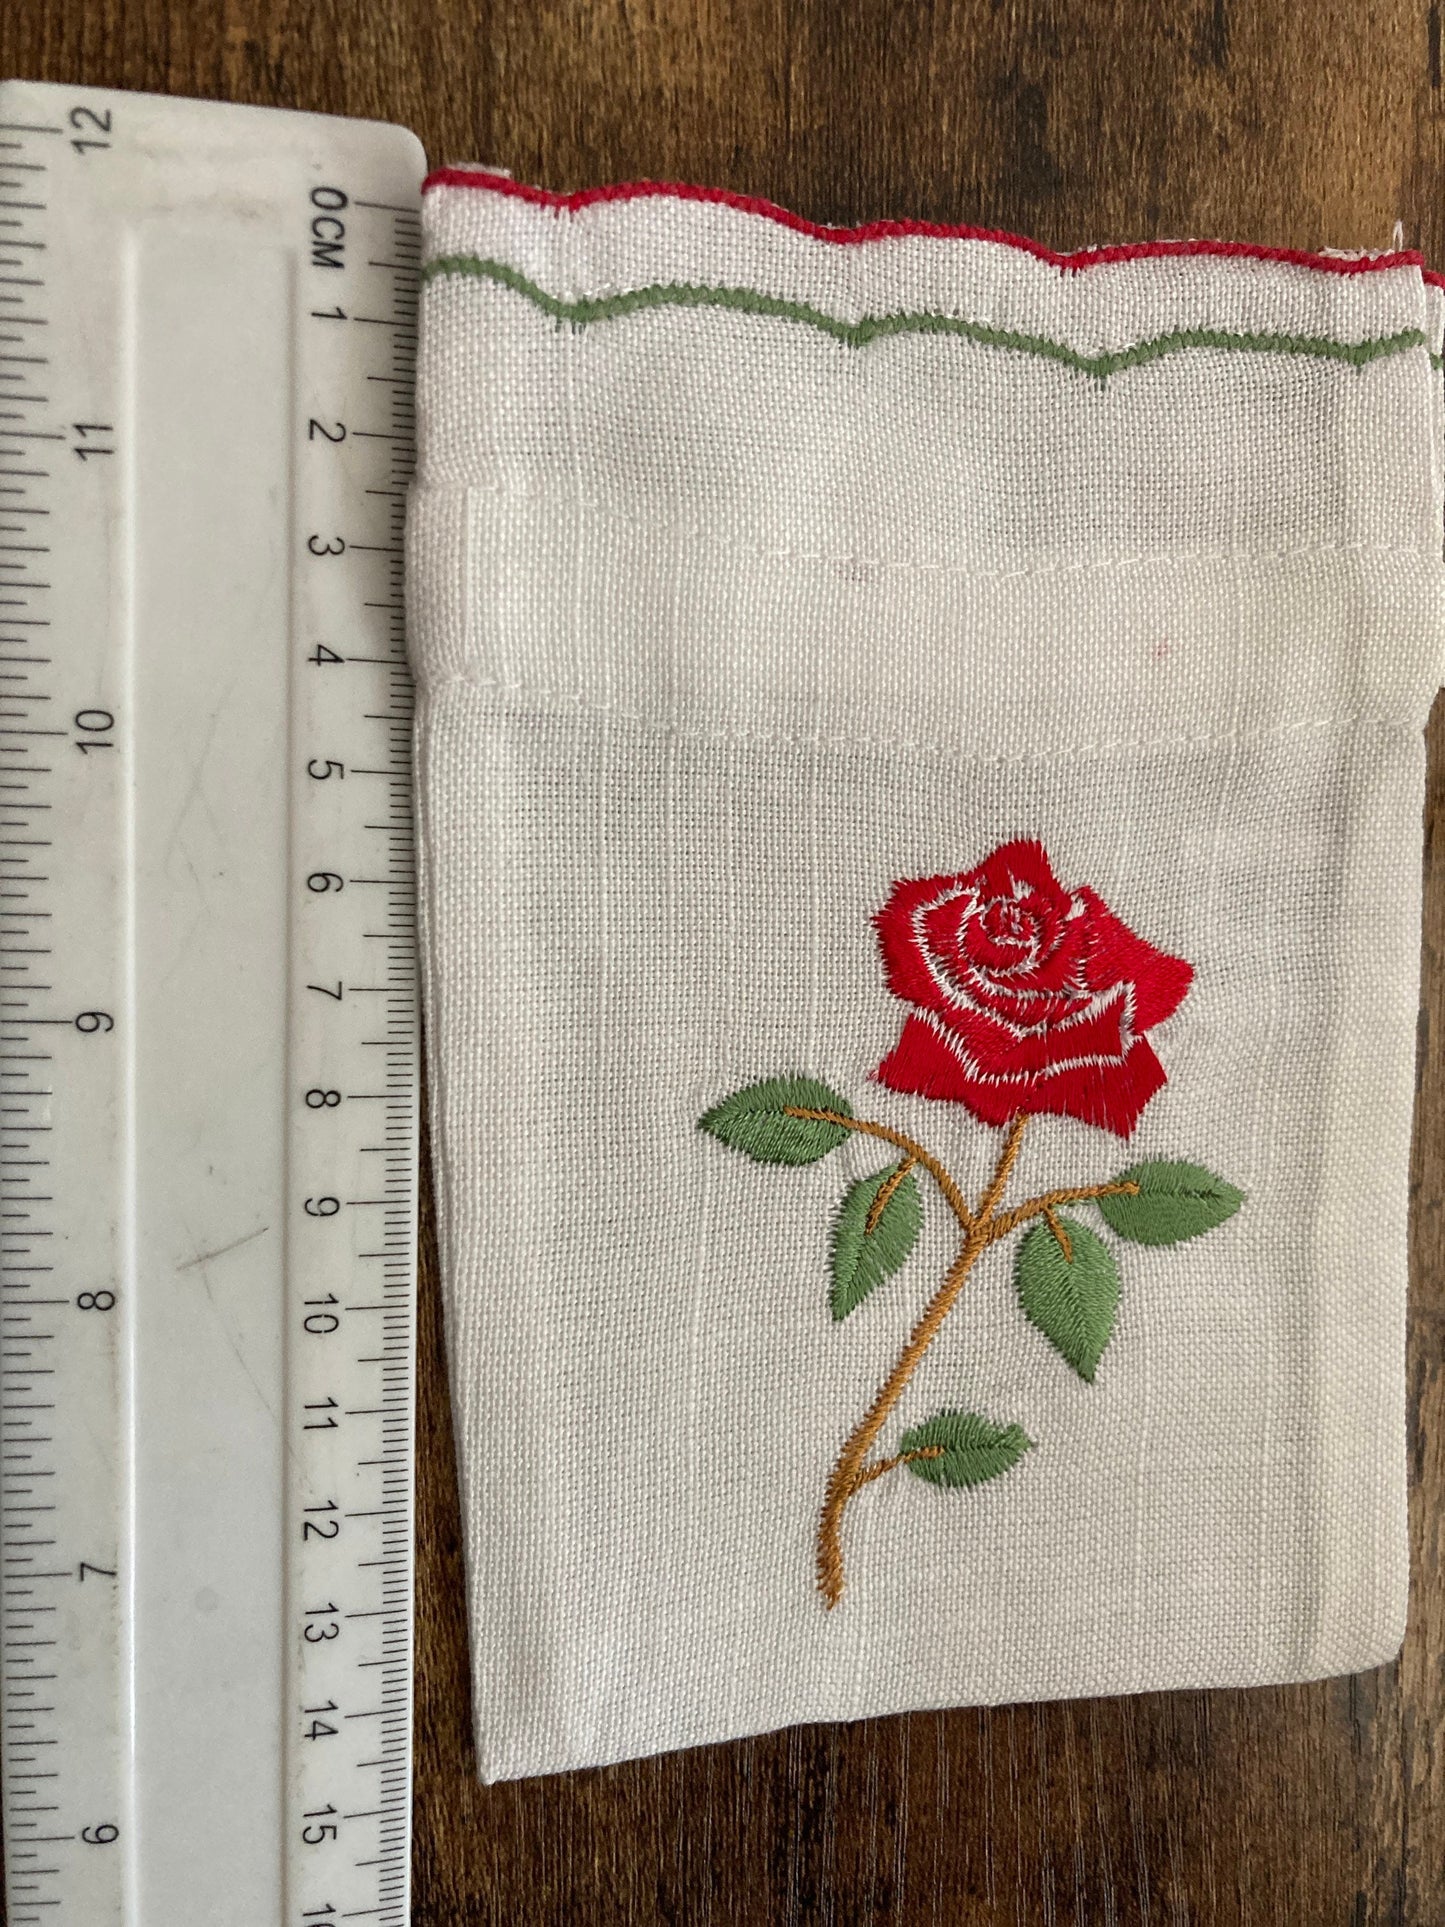 embroidered red English rose linen bag drawstring bag smalls storage size 10x15cm